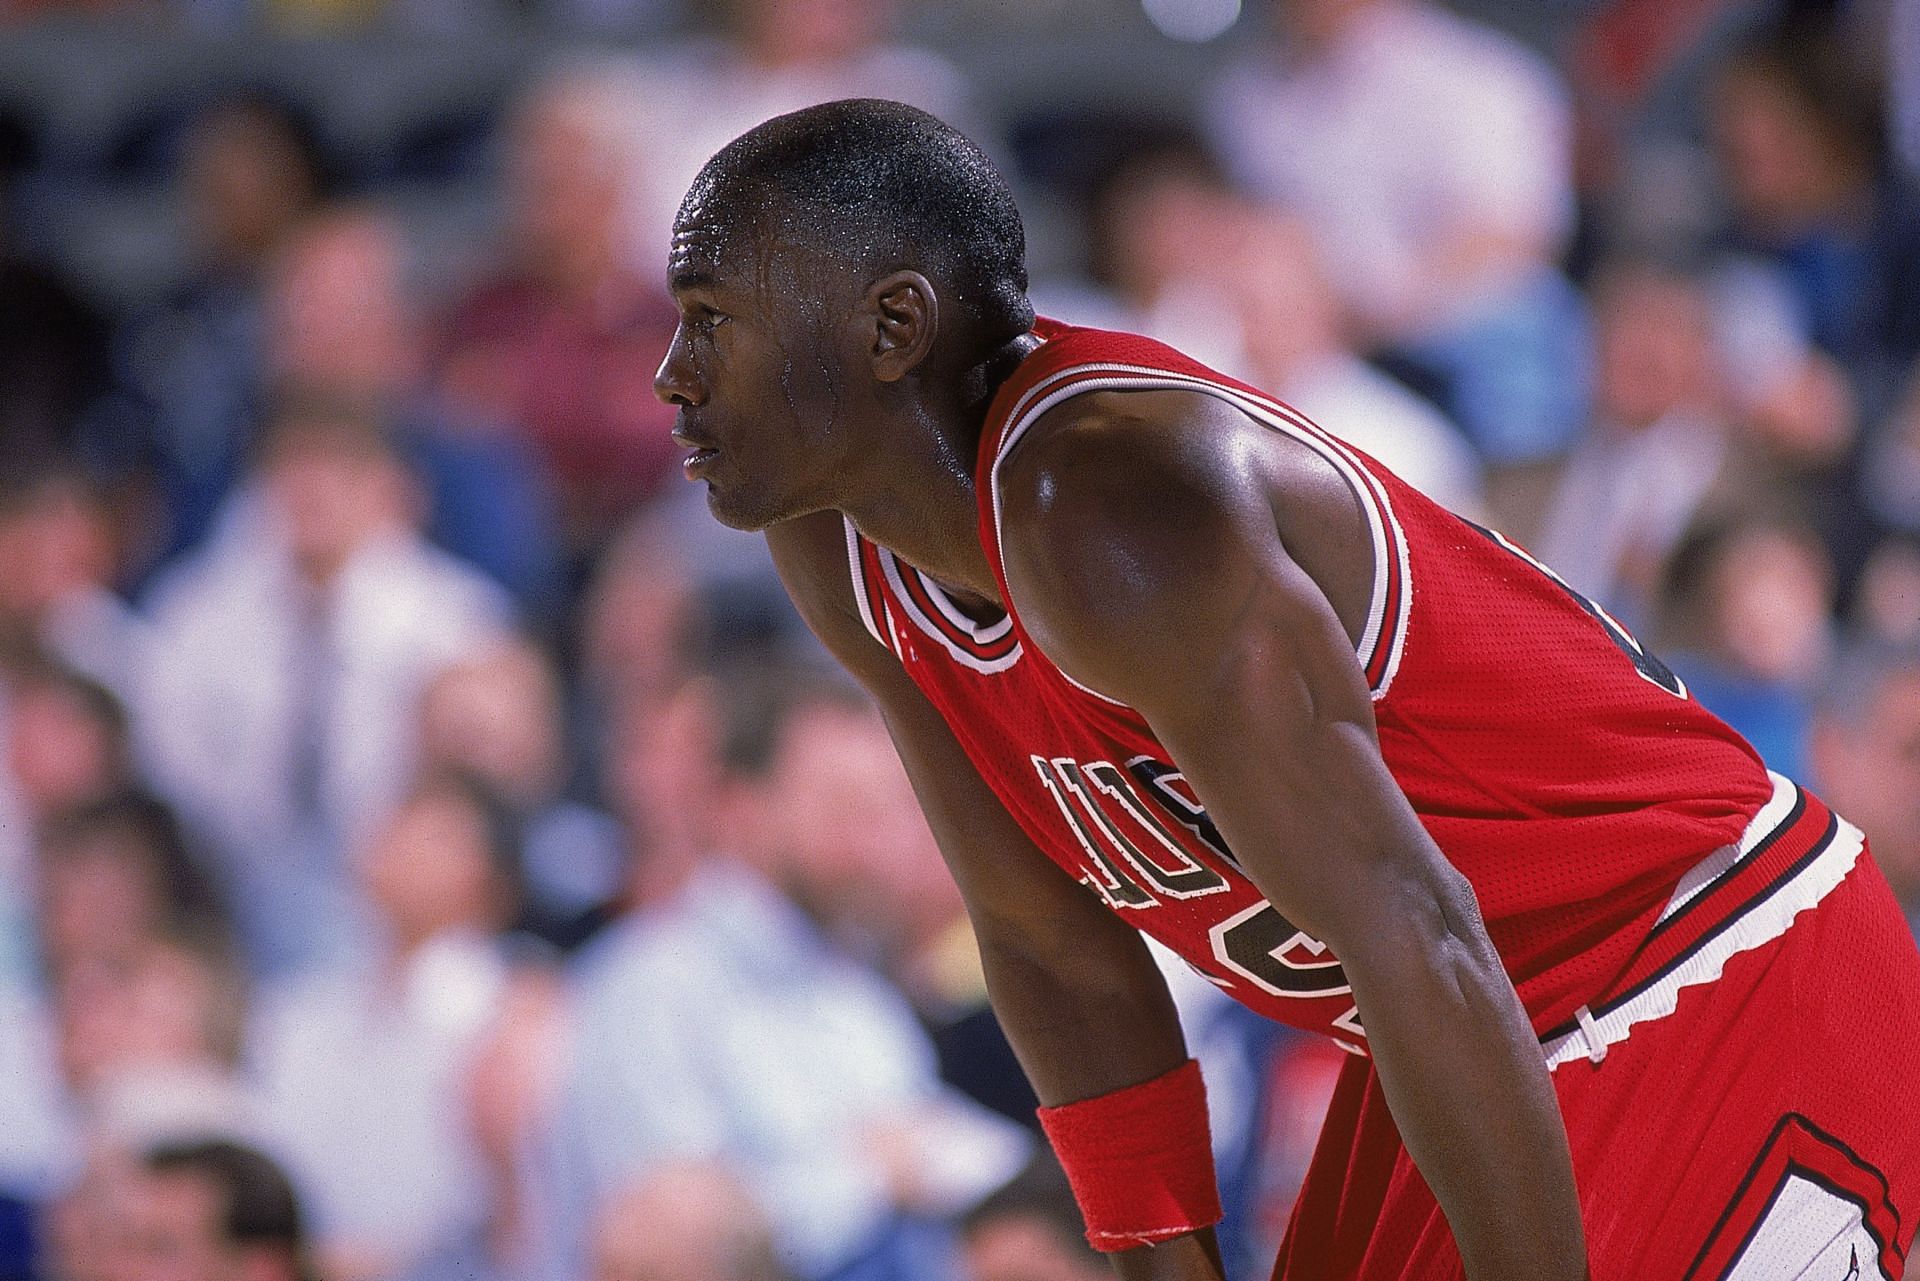 Chicago Bulls superstar Michael Jordan